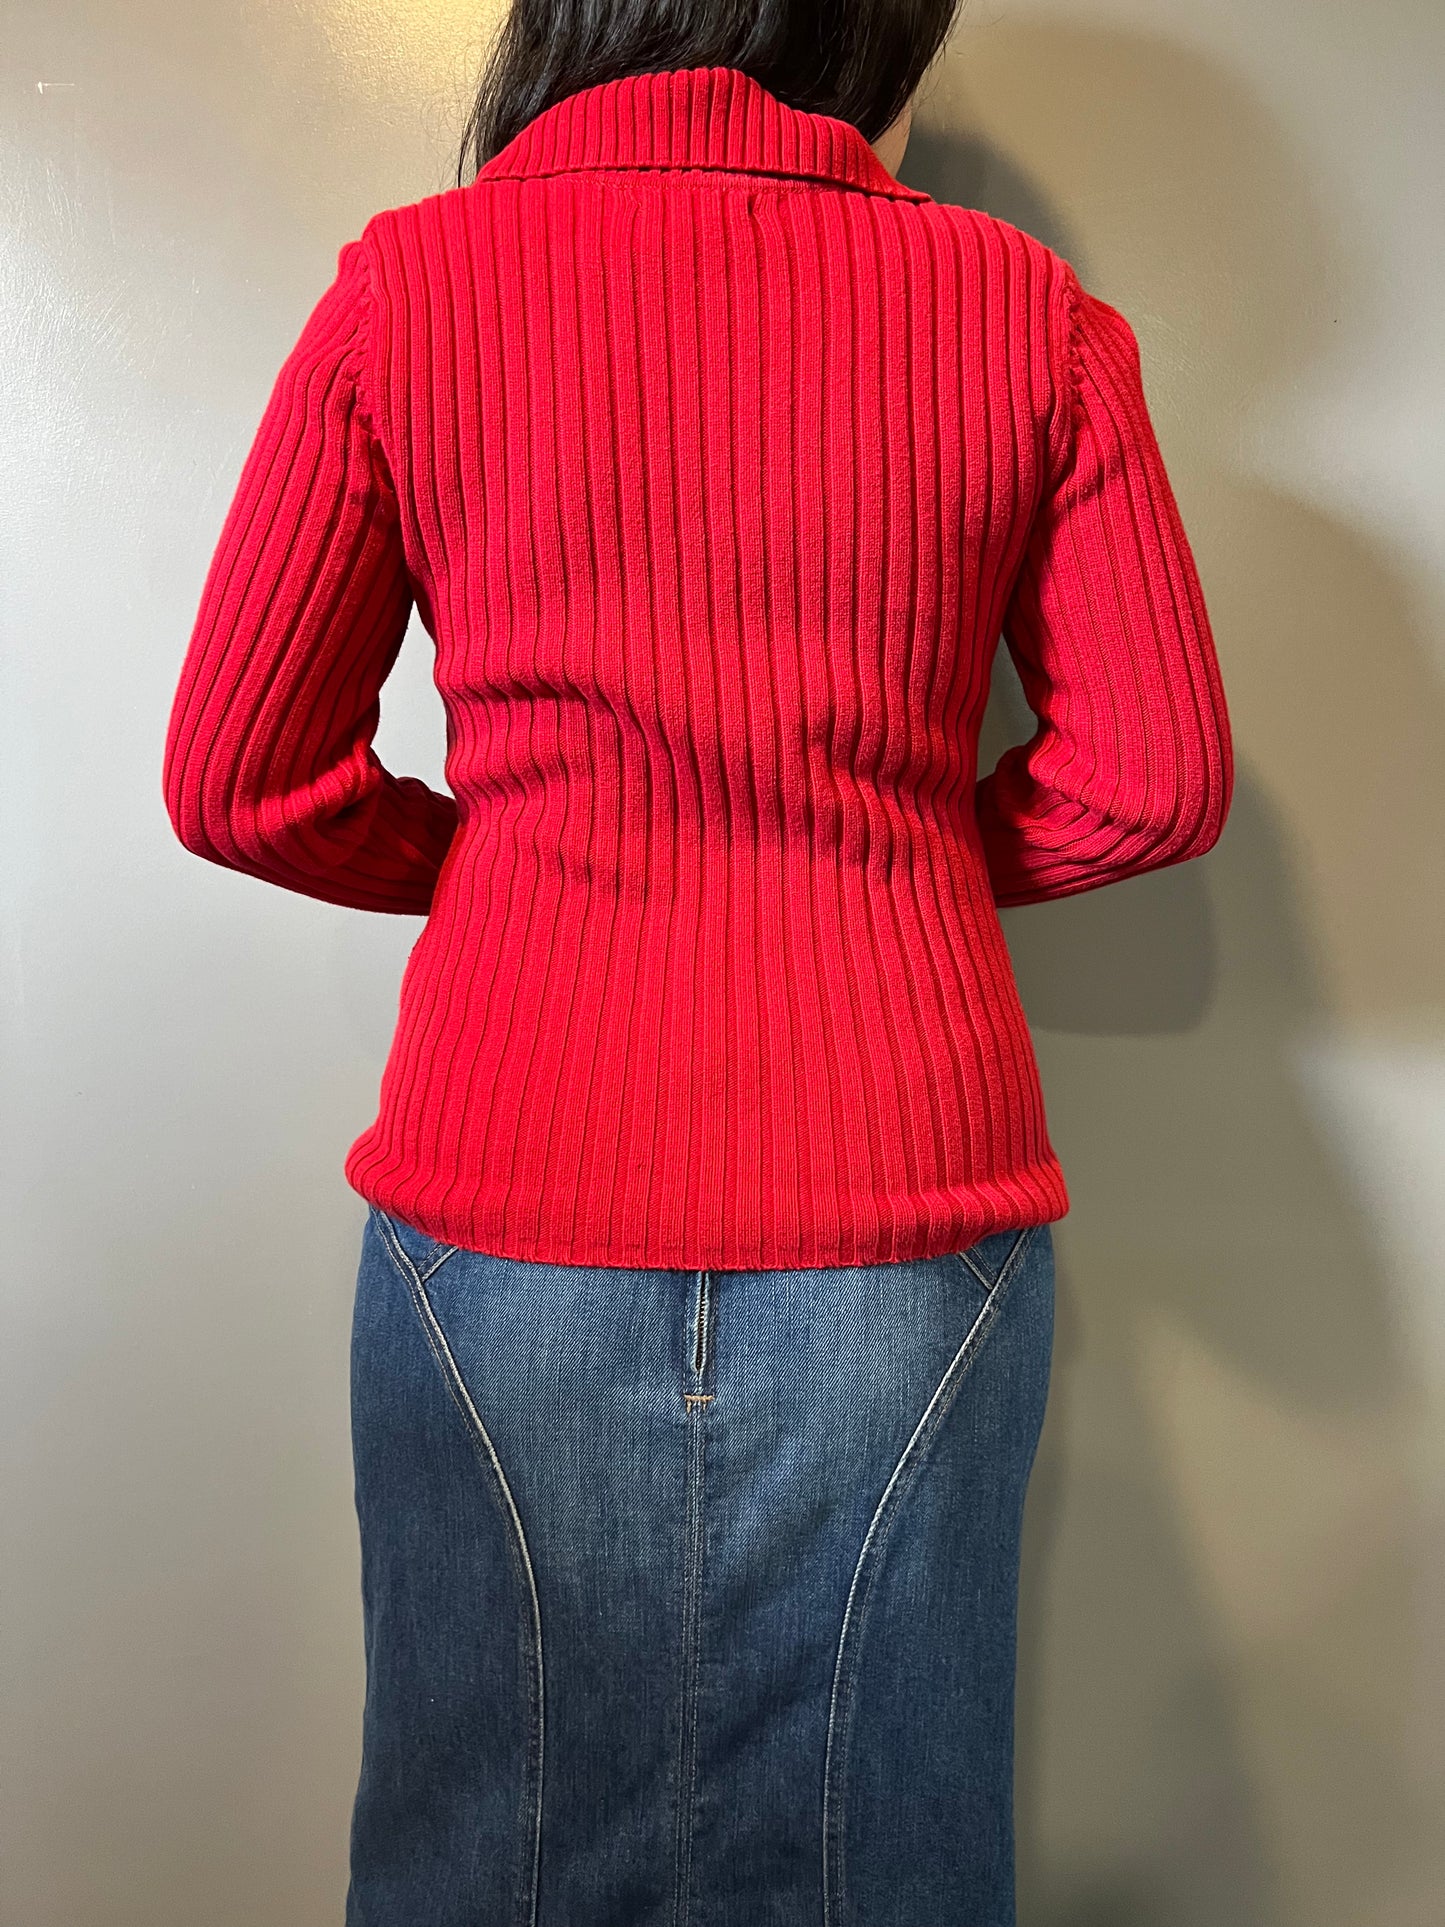 Tommy Hilfiger Knit Sweater - XS/S